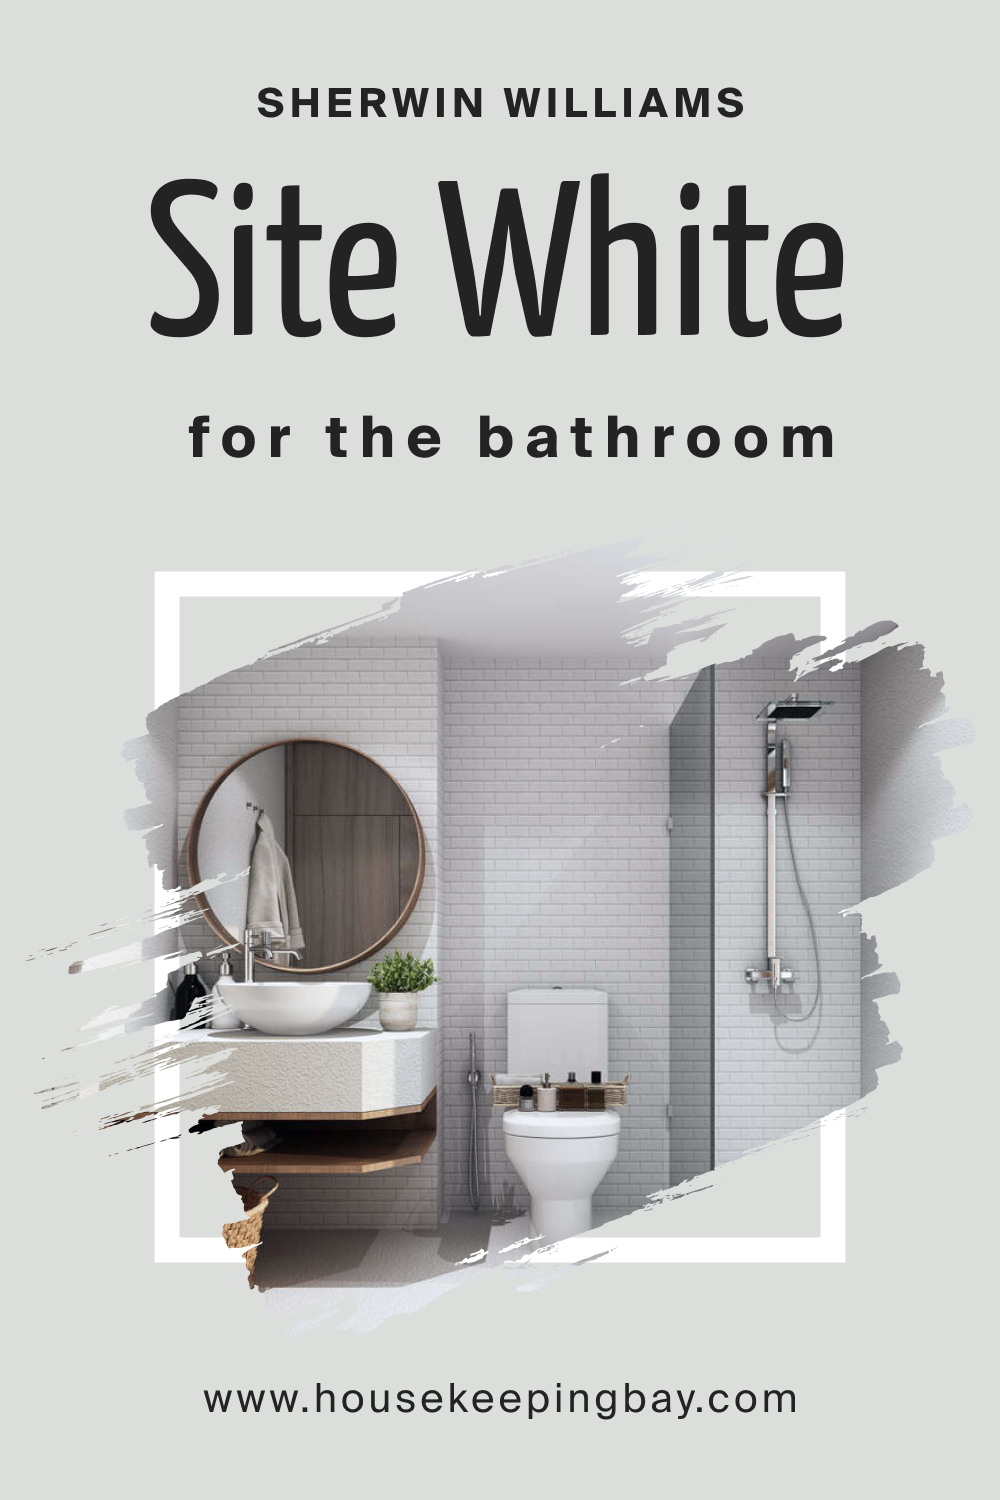 Sherwin Williams. SW Site White in the Bathroom